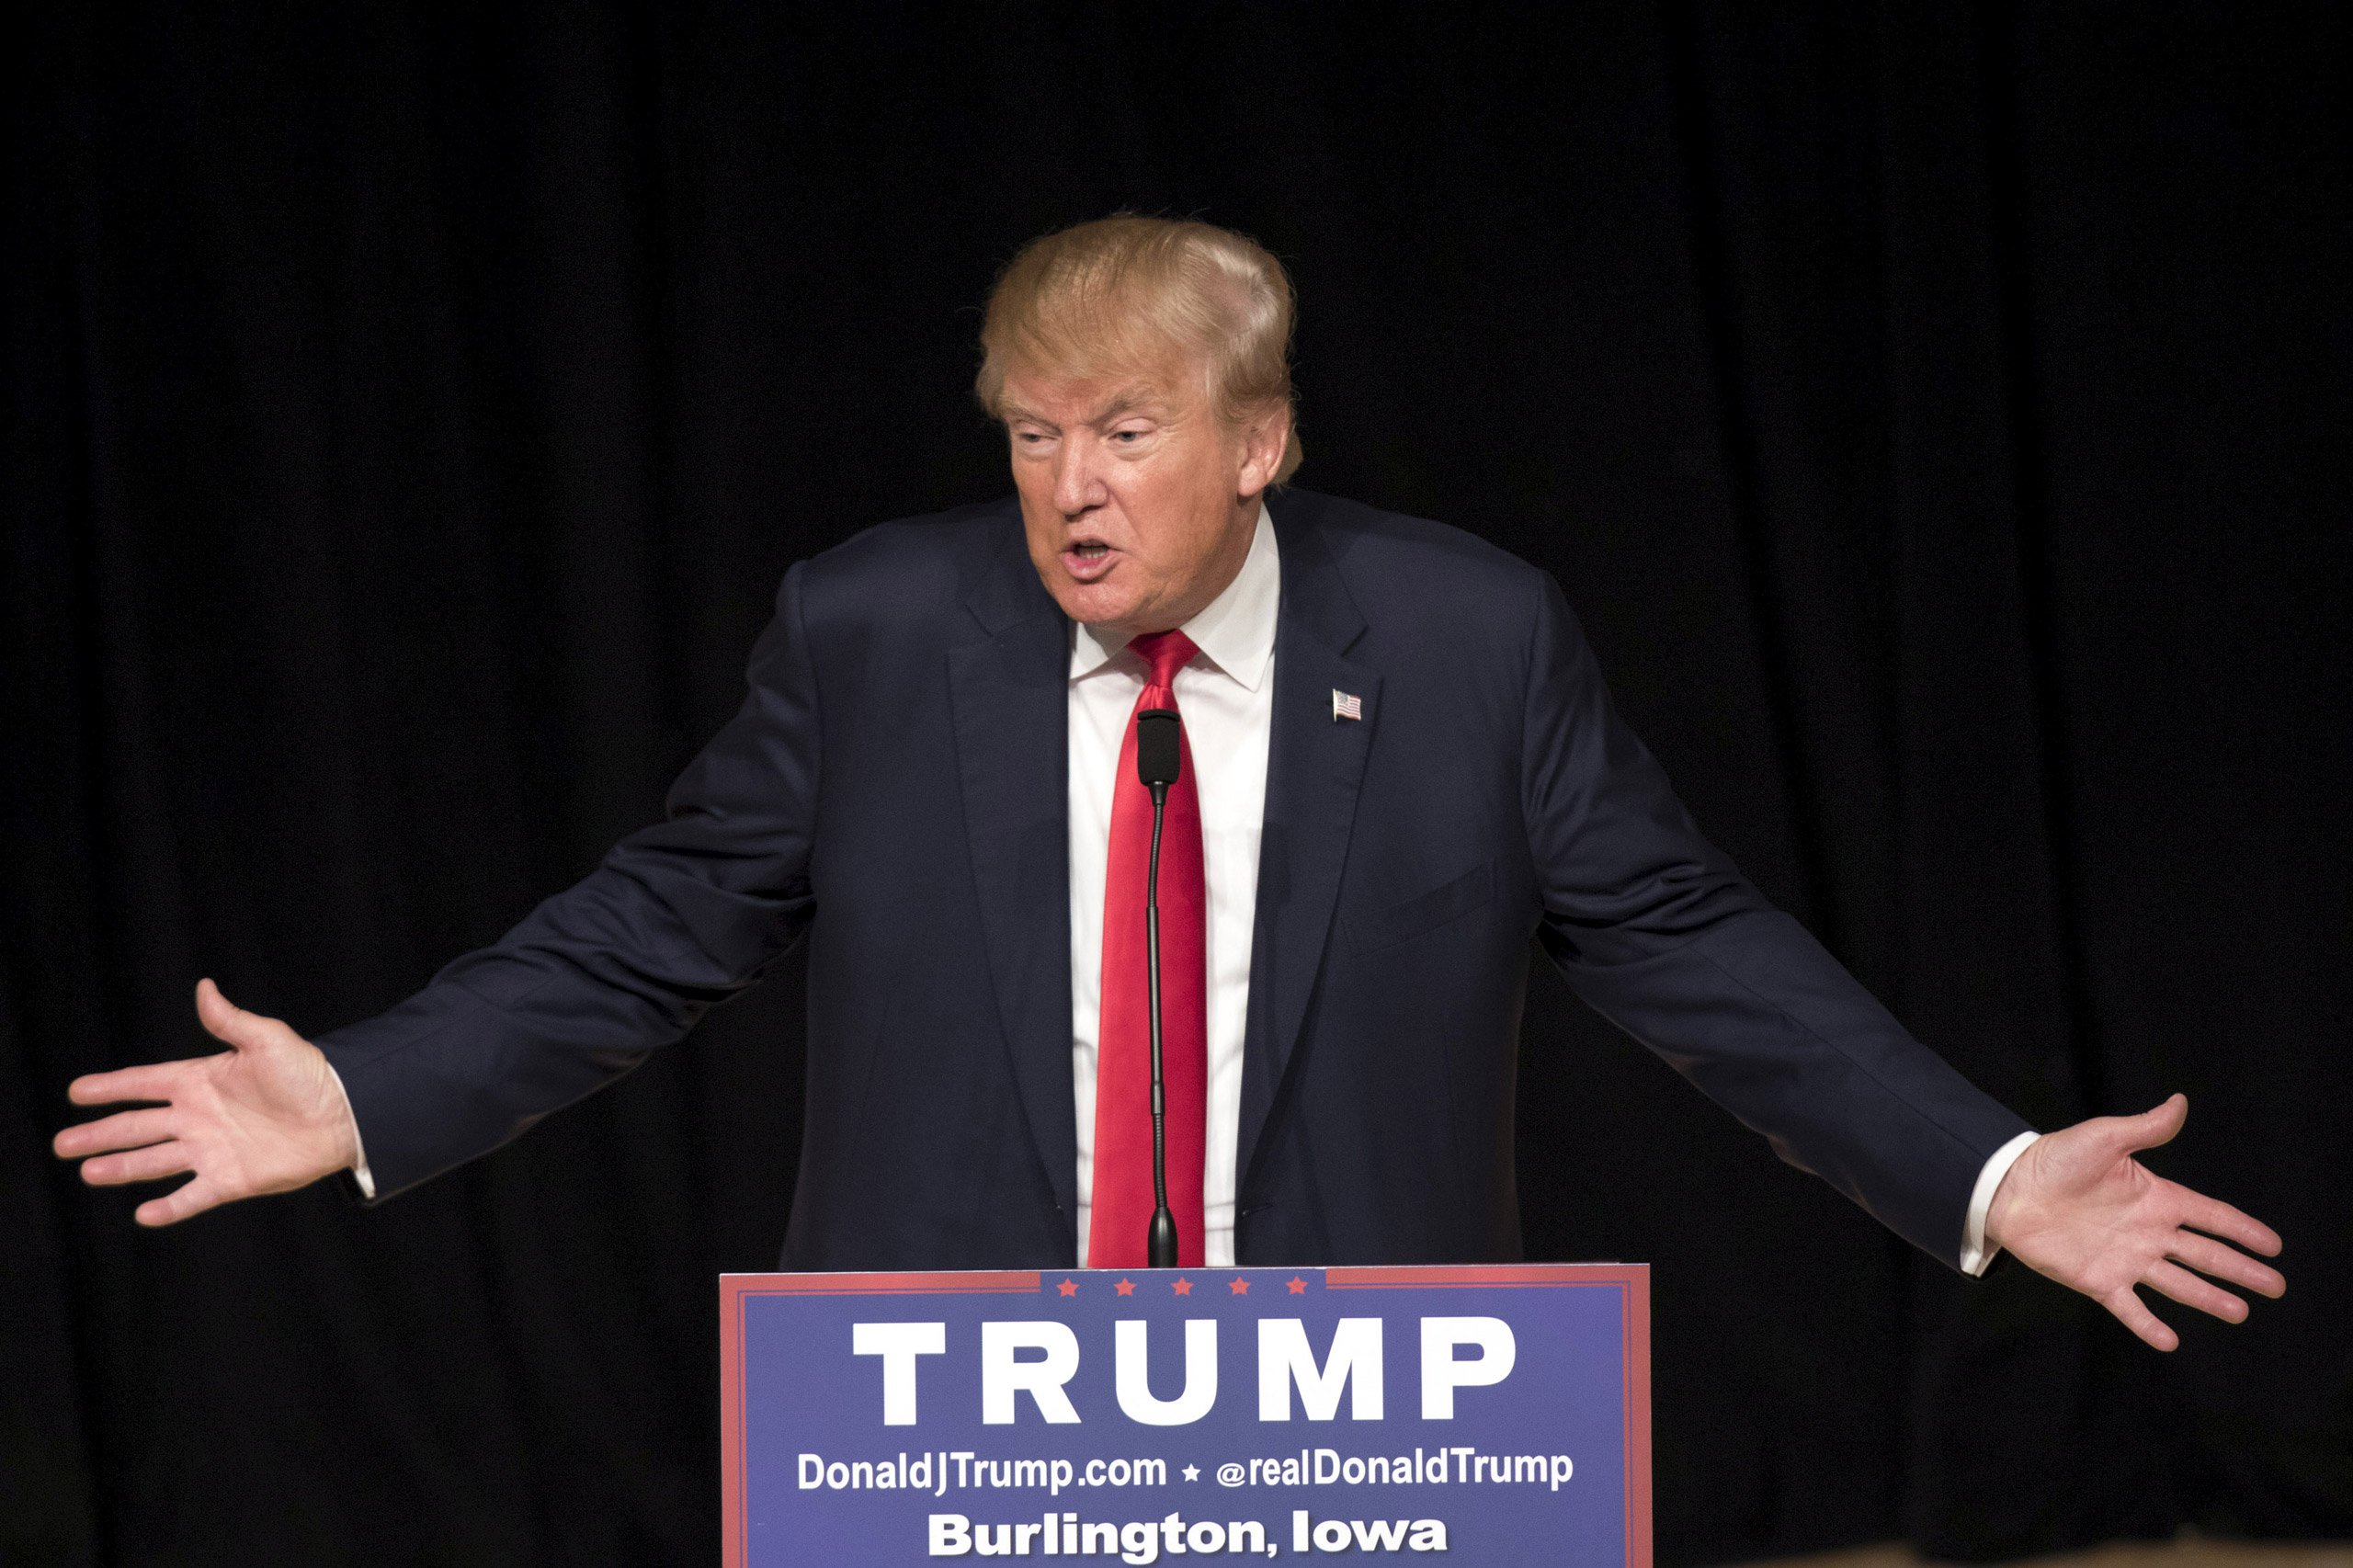 Republican presidential candidate Donald Trump speaks during a campaign rally at Burlington Memorial Auditorium in Burlington, Iowa